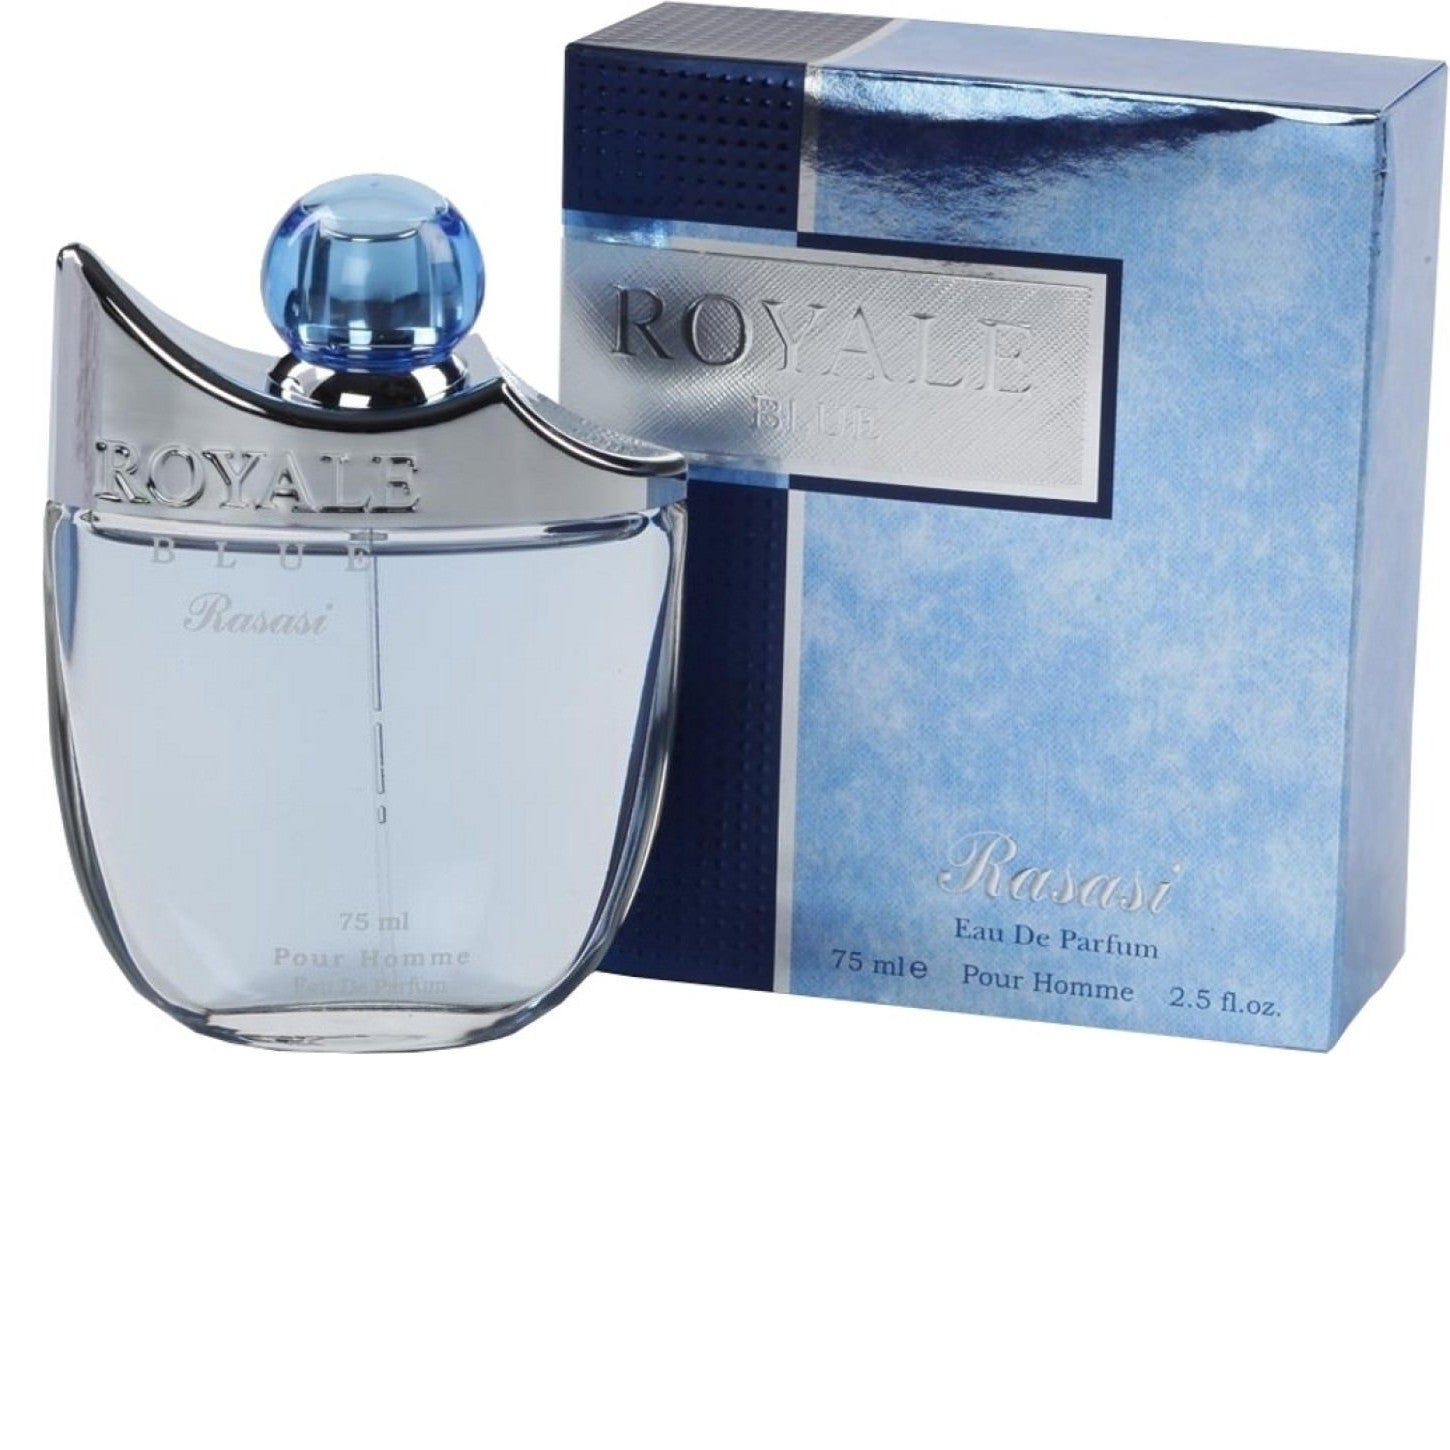 Rasasi Royale Blue Perfume for Men - Eau de Parfum, 75ml - samawa perfumes 